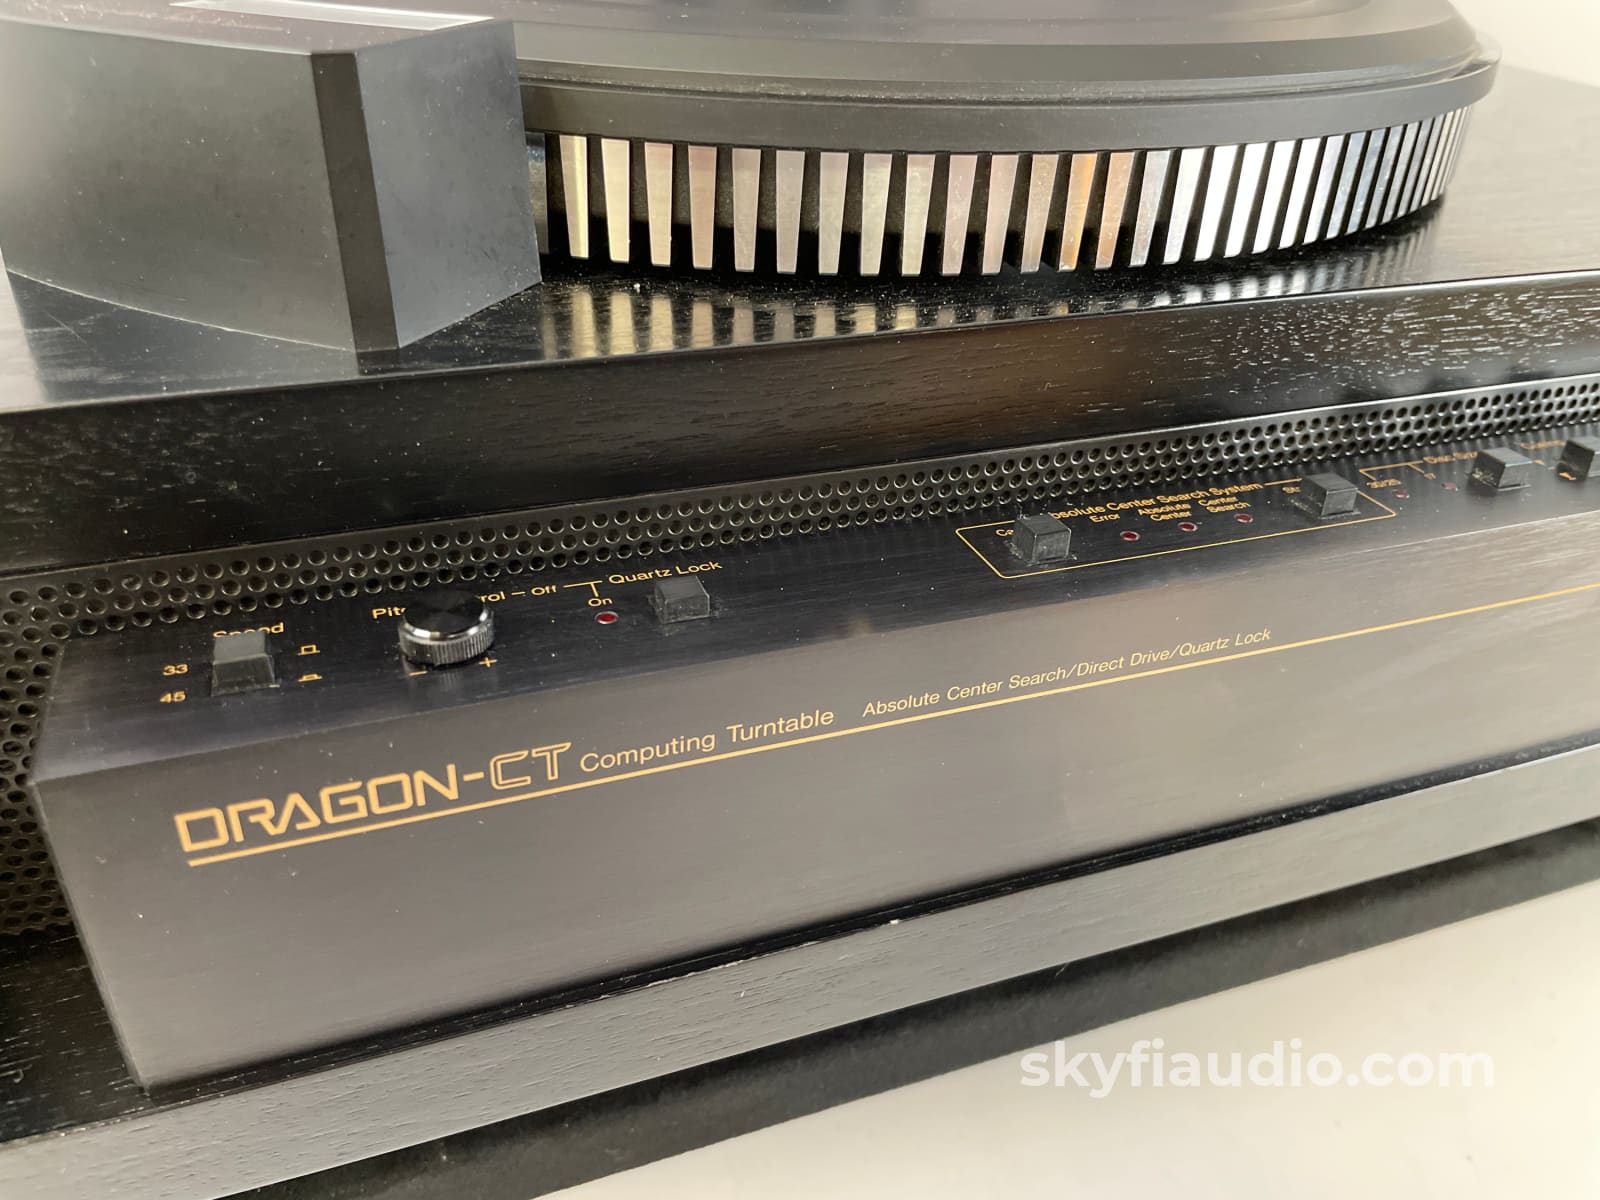 Nakamichi Dragon-Ct Computing Turntable - Super Rare Masterpiece From Japan